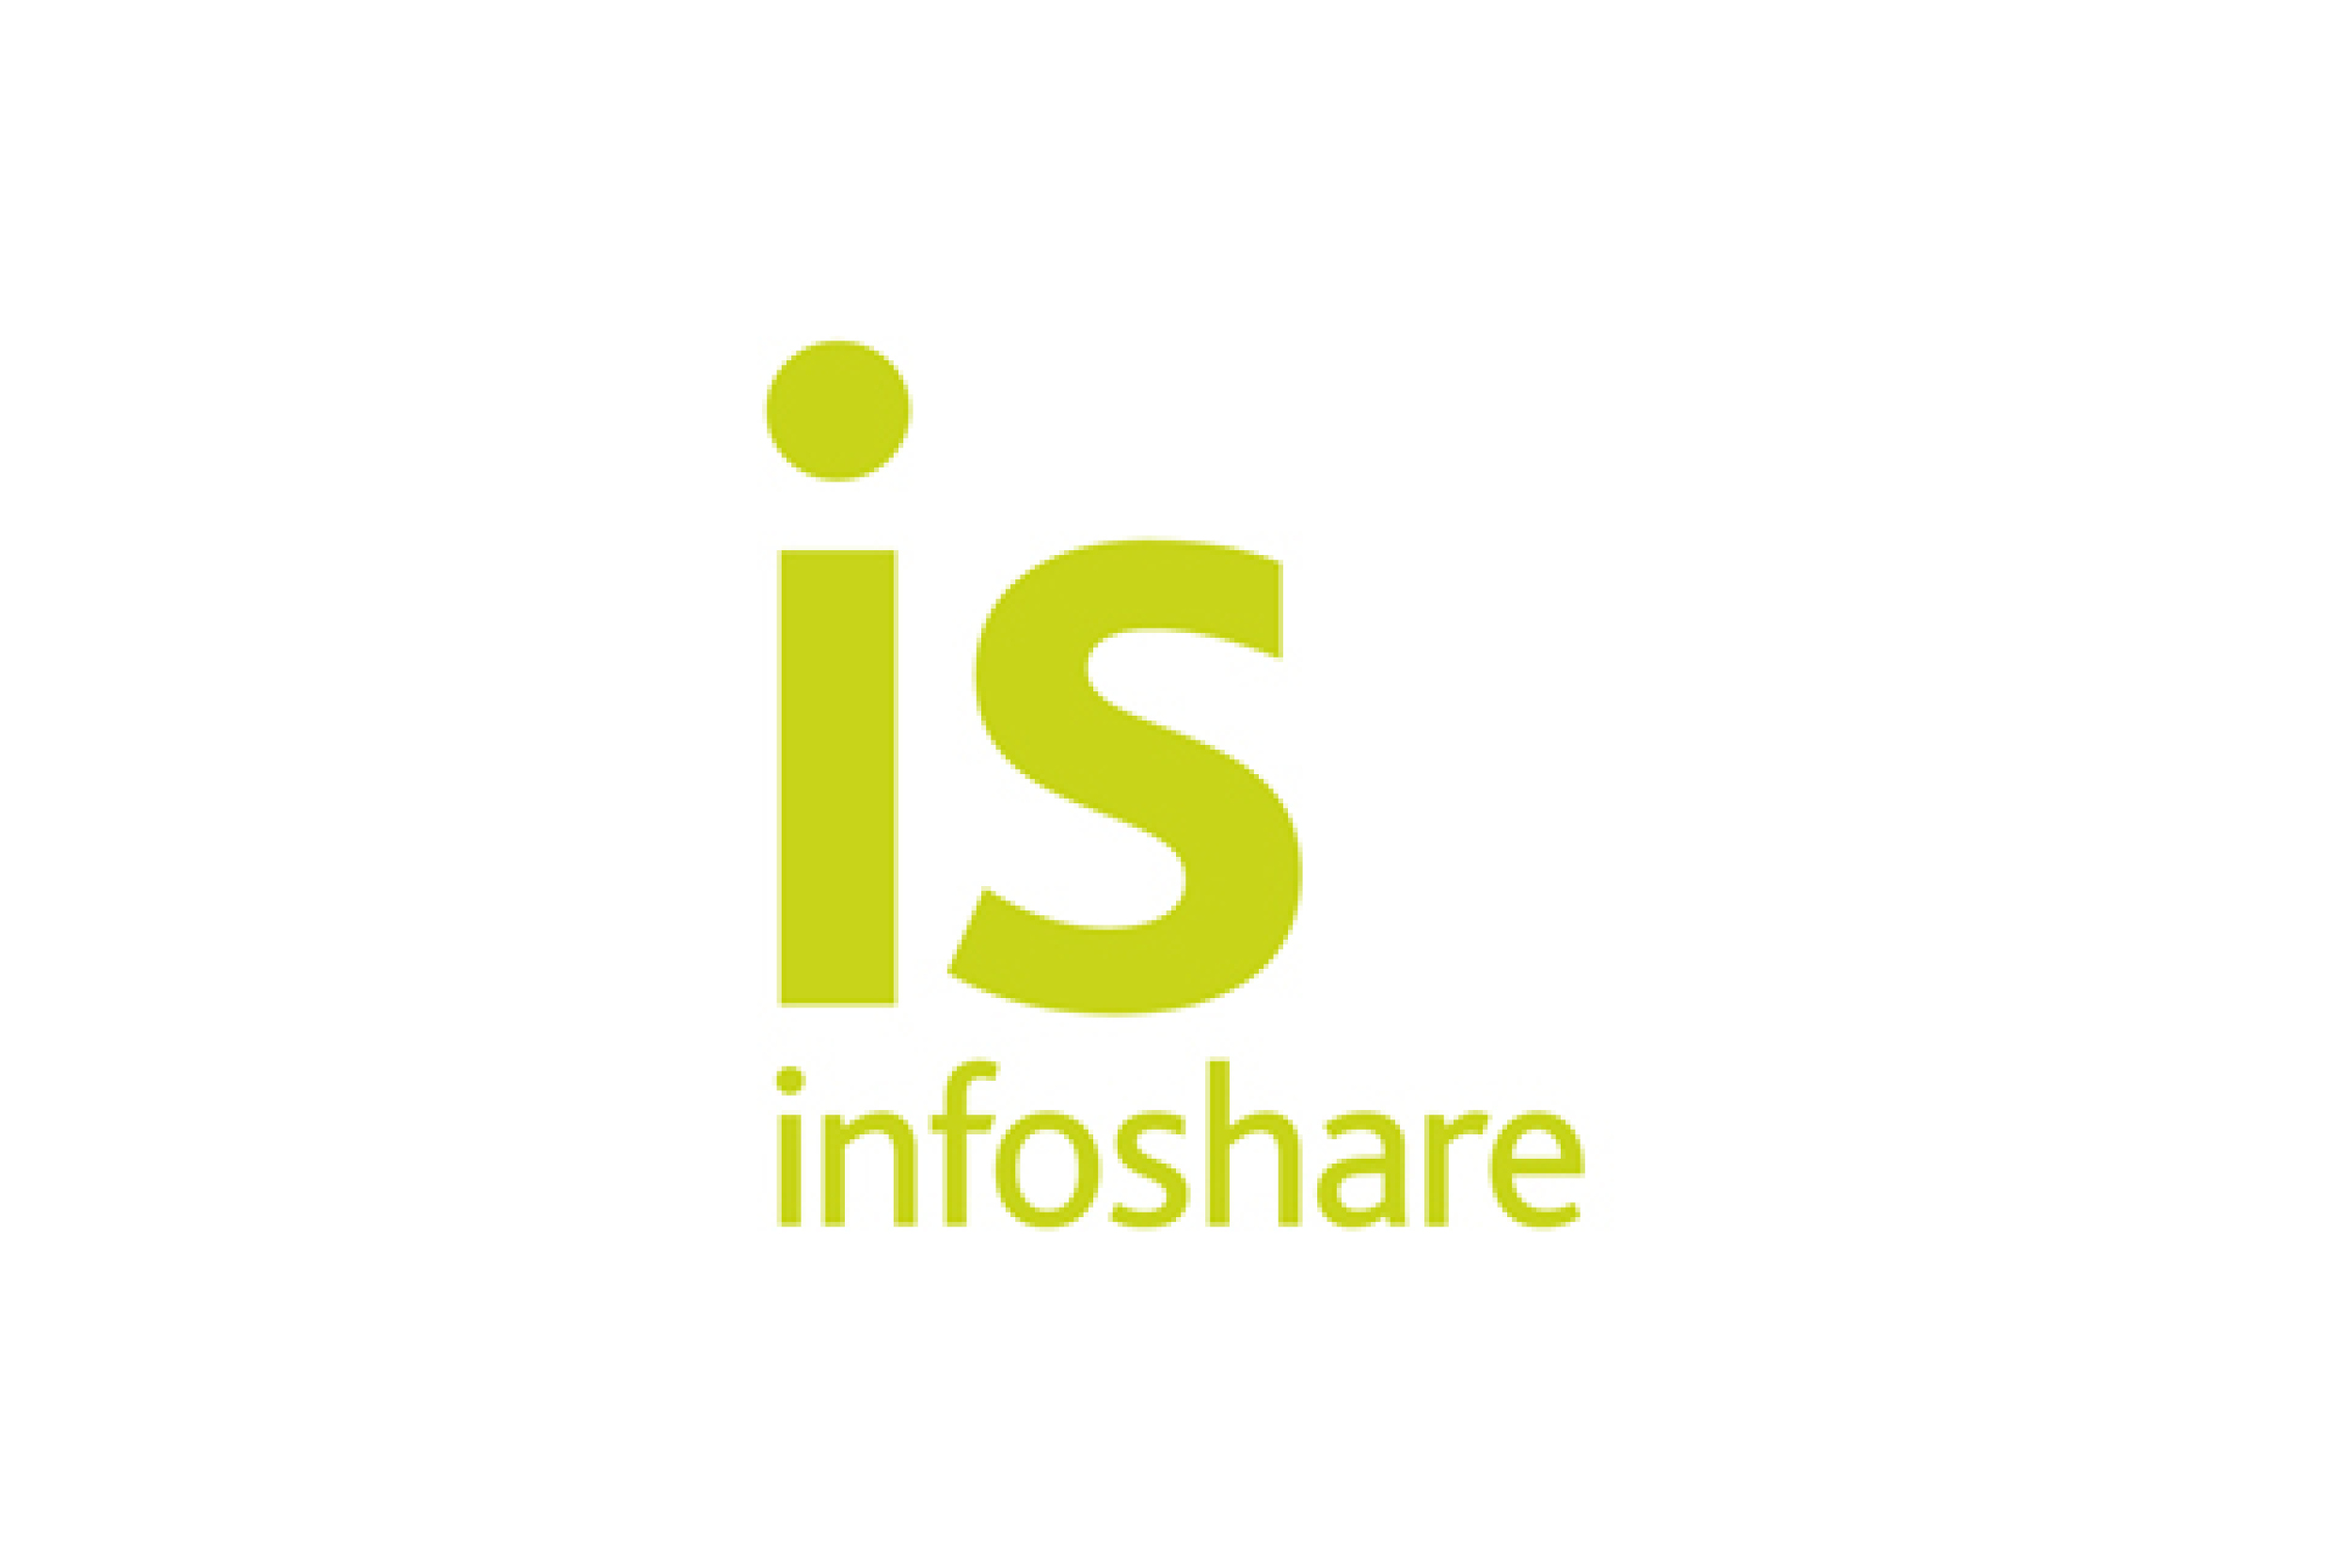 Infoshare logo